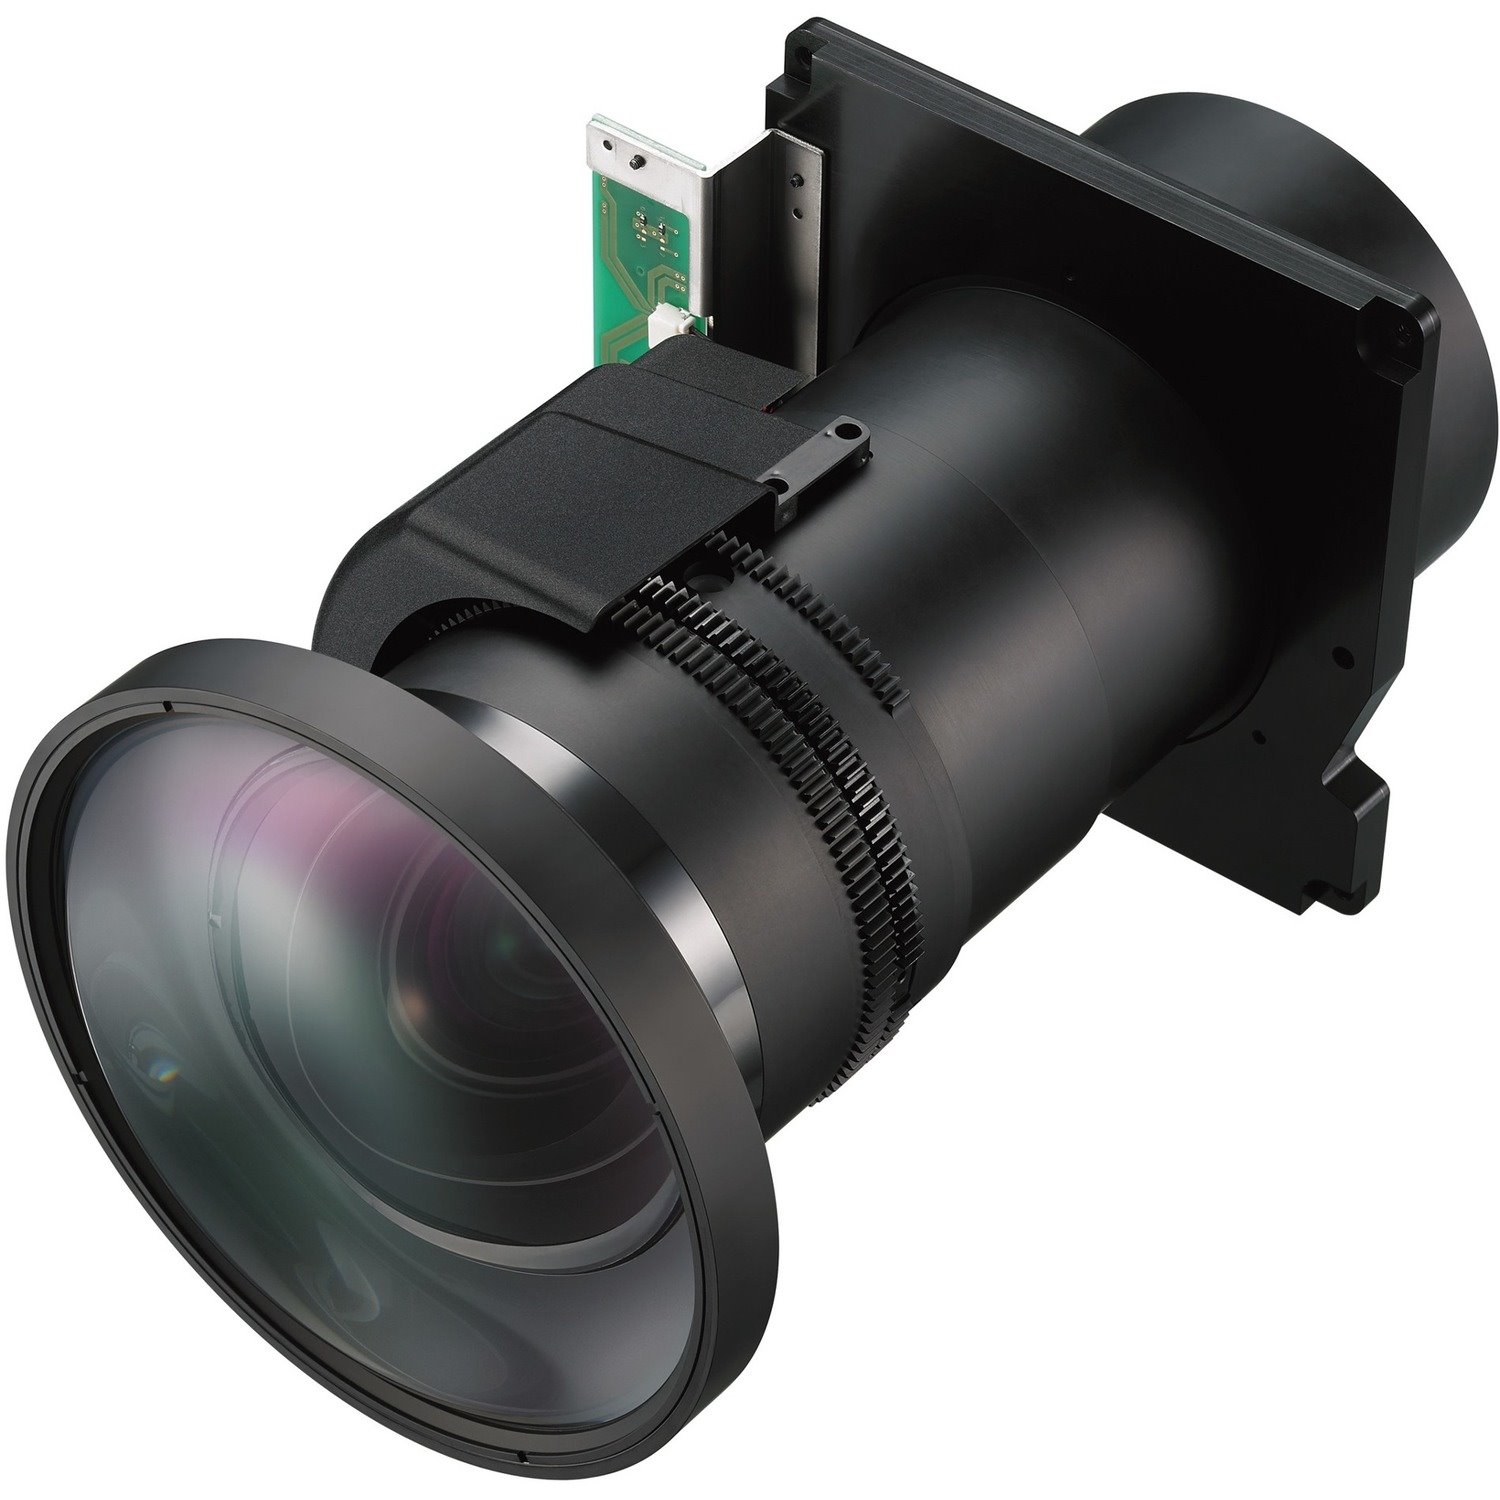 Sonyf/2 - Short Throw Zoom Lens